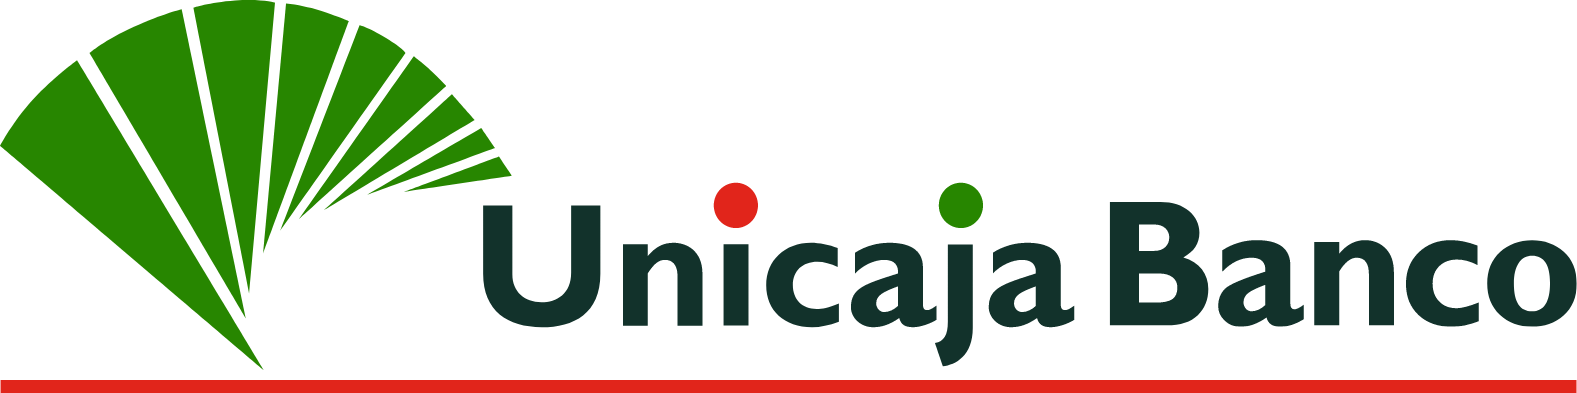 Unicaja Banco logo large (transparent PNG)